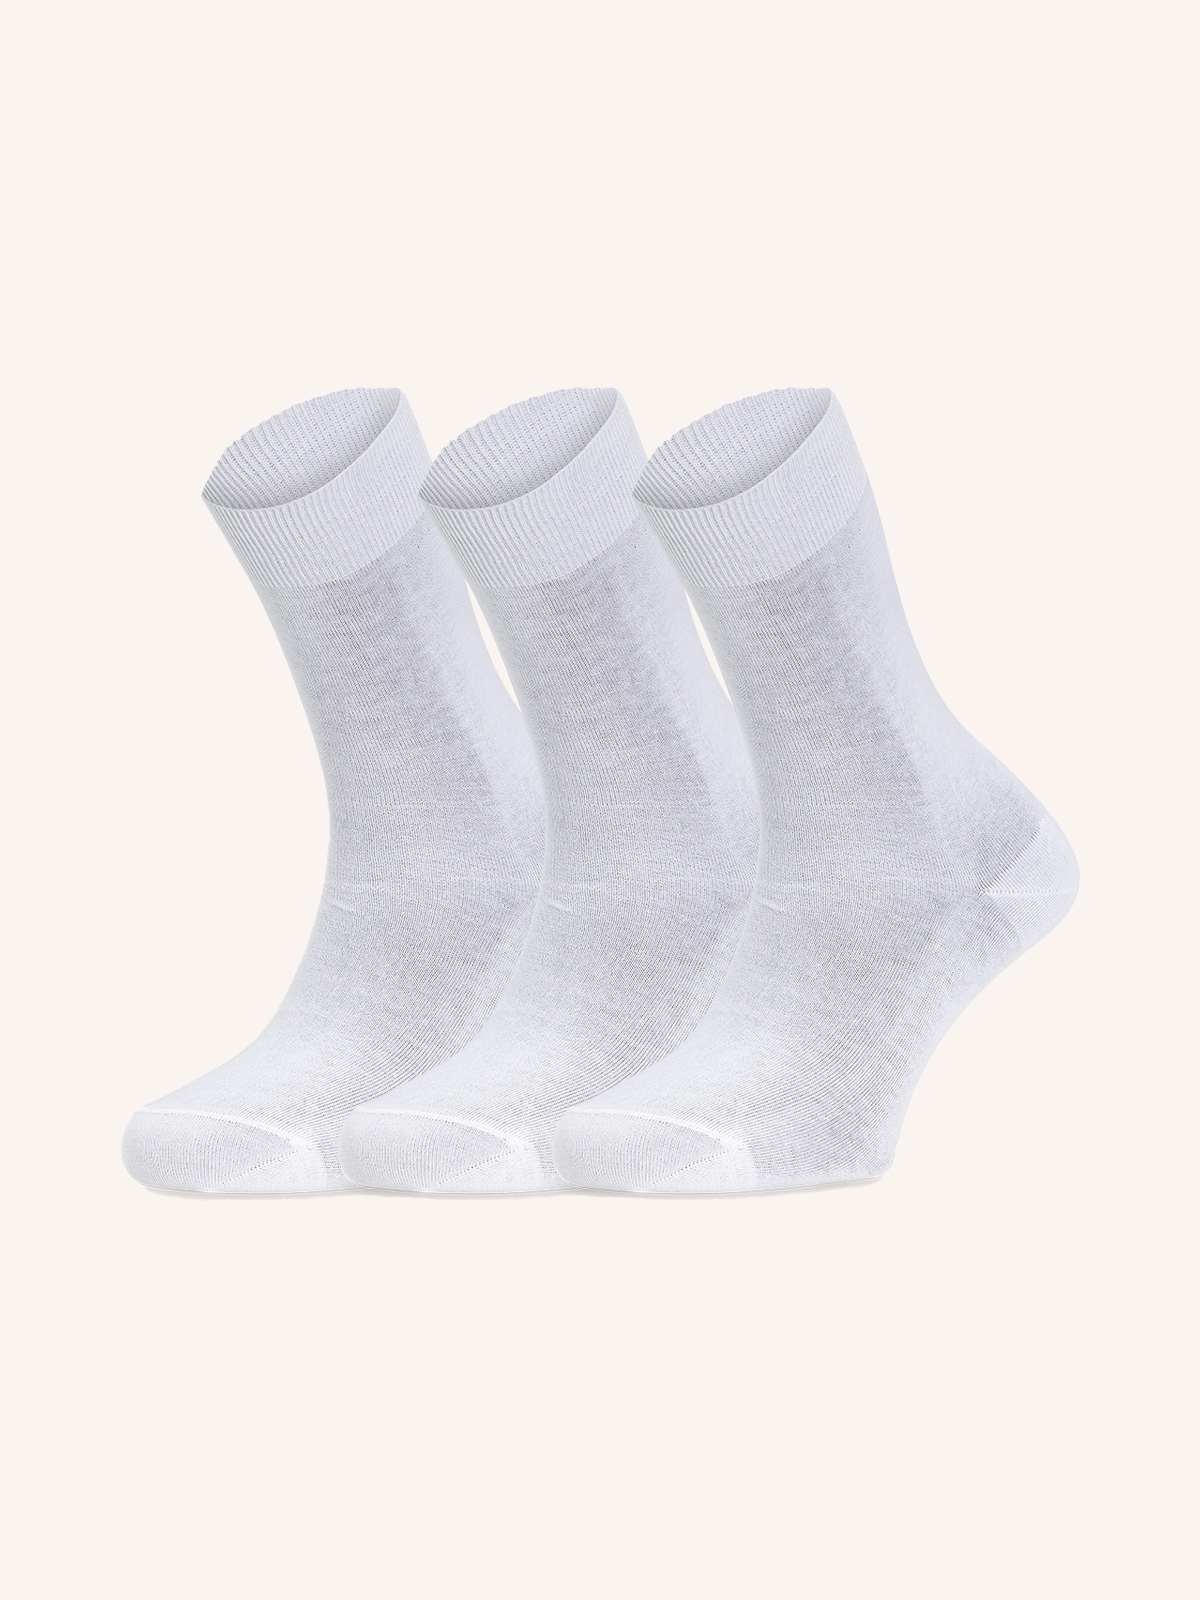 Short Stocking in Organic Cotton for Men | Plain Color | Pack of 3 pairs | Bio U3